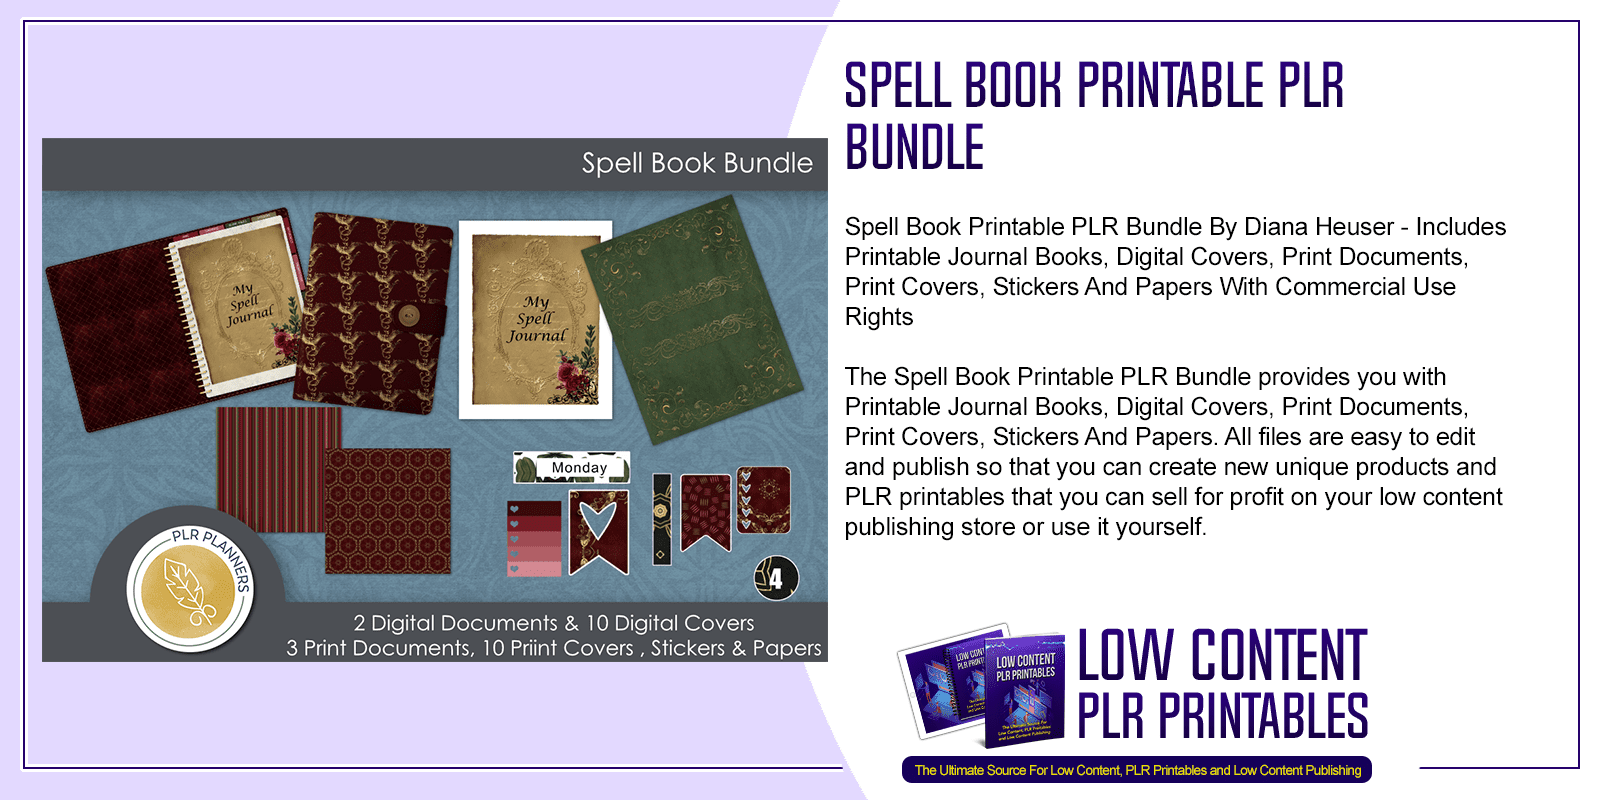 Spell Book Printable PLR Bundle